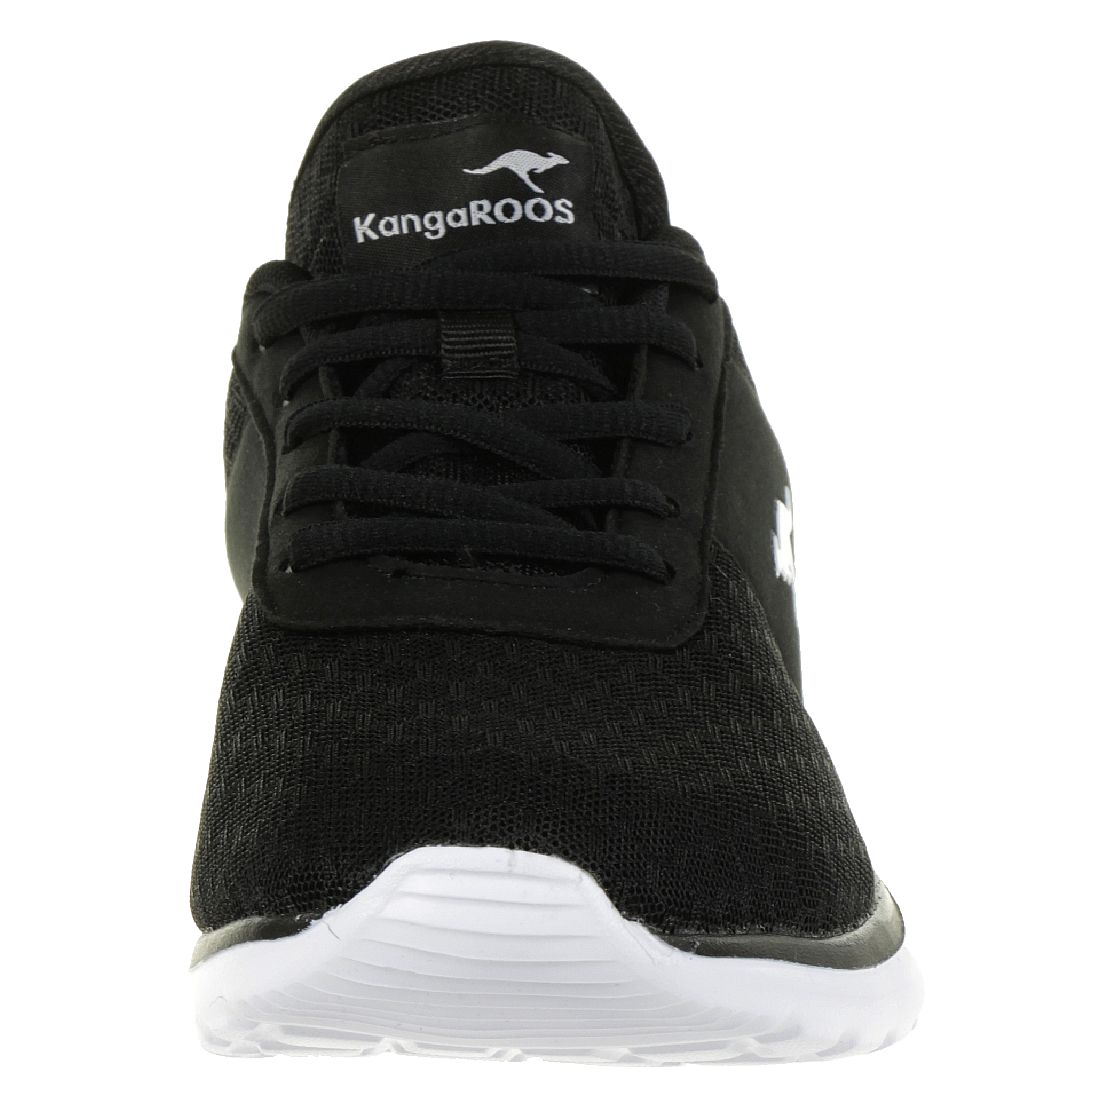 Kangaroos Bumpy Sneaker Laufschuh Damen Schuhe 30511 000 schwarz